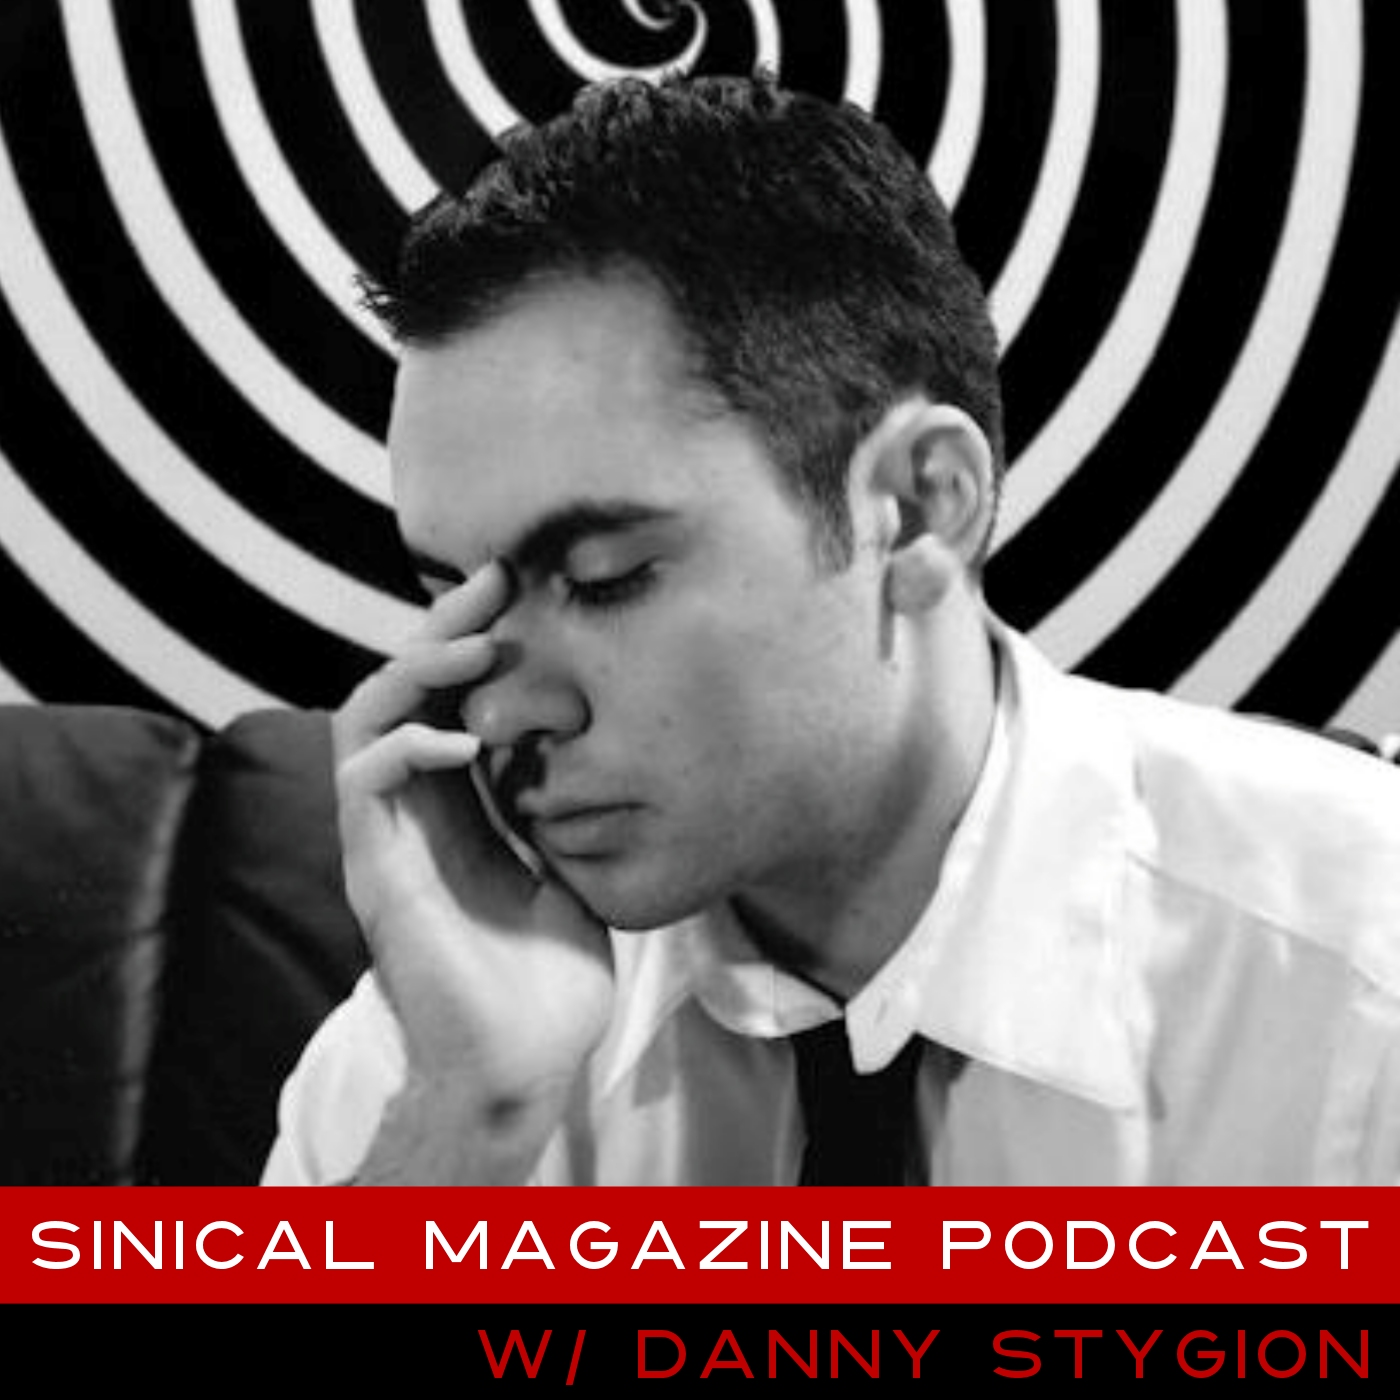 The Sinical Magazine Podcast